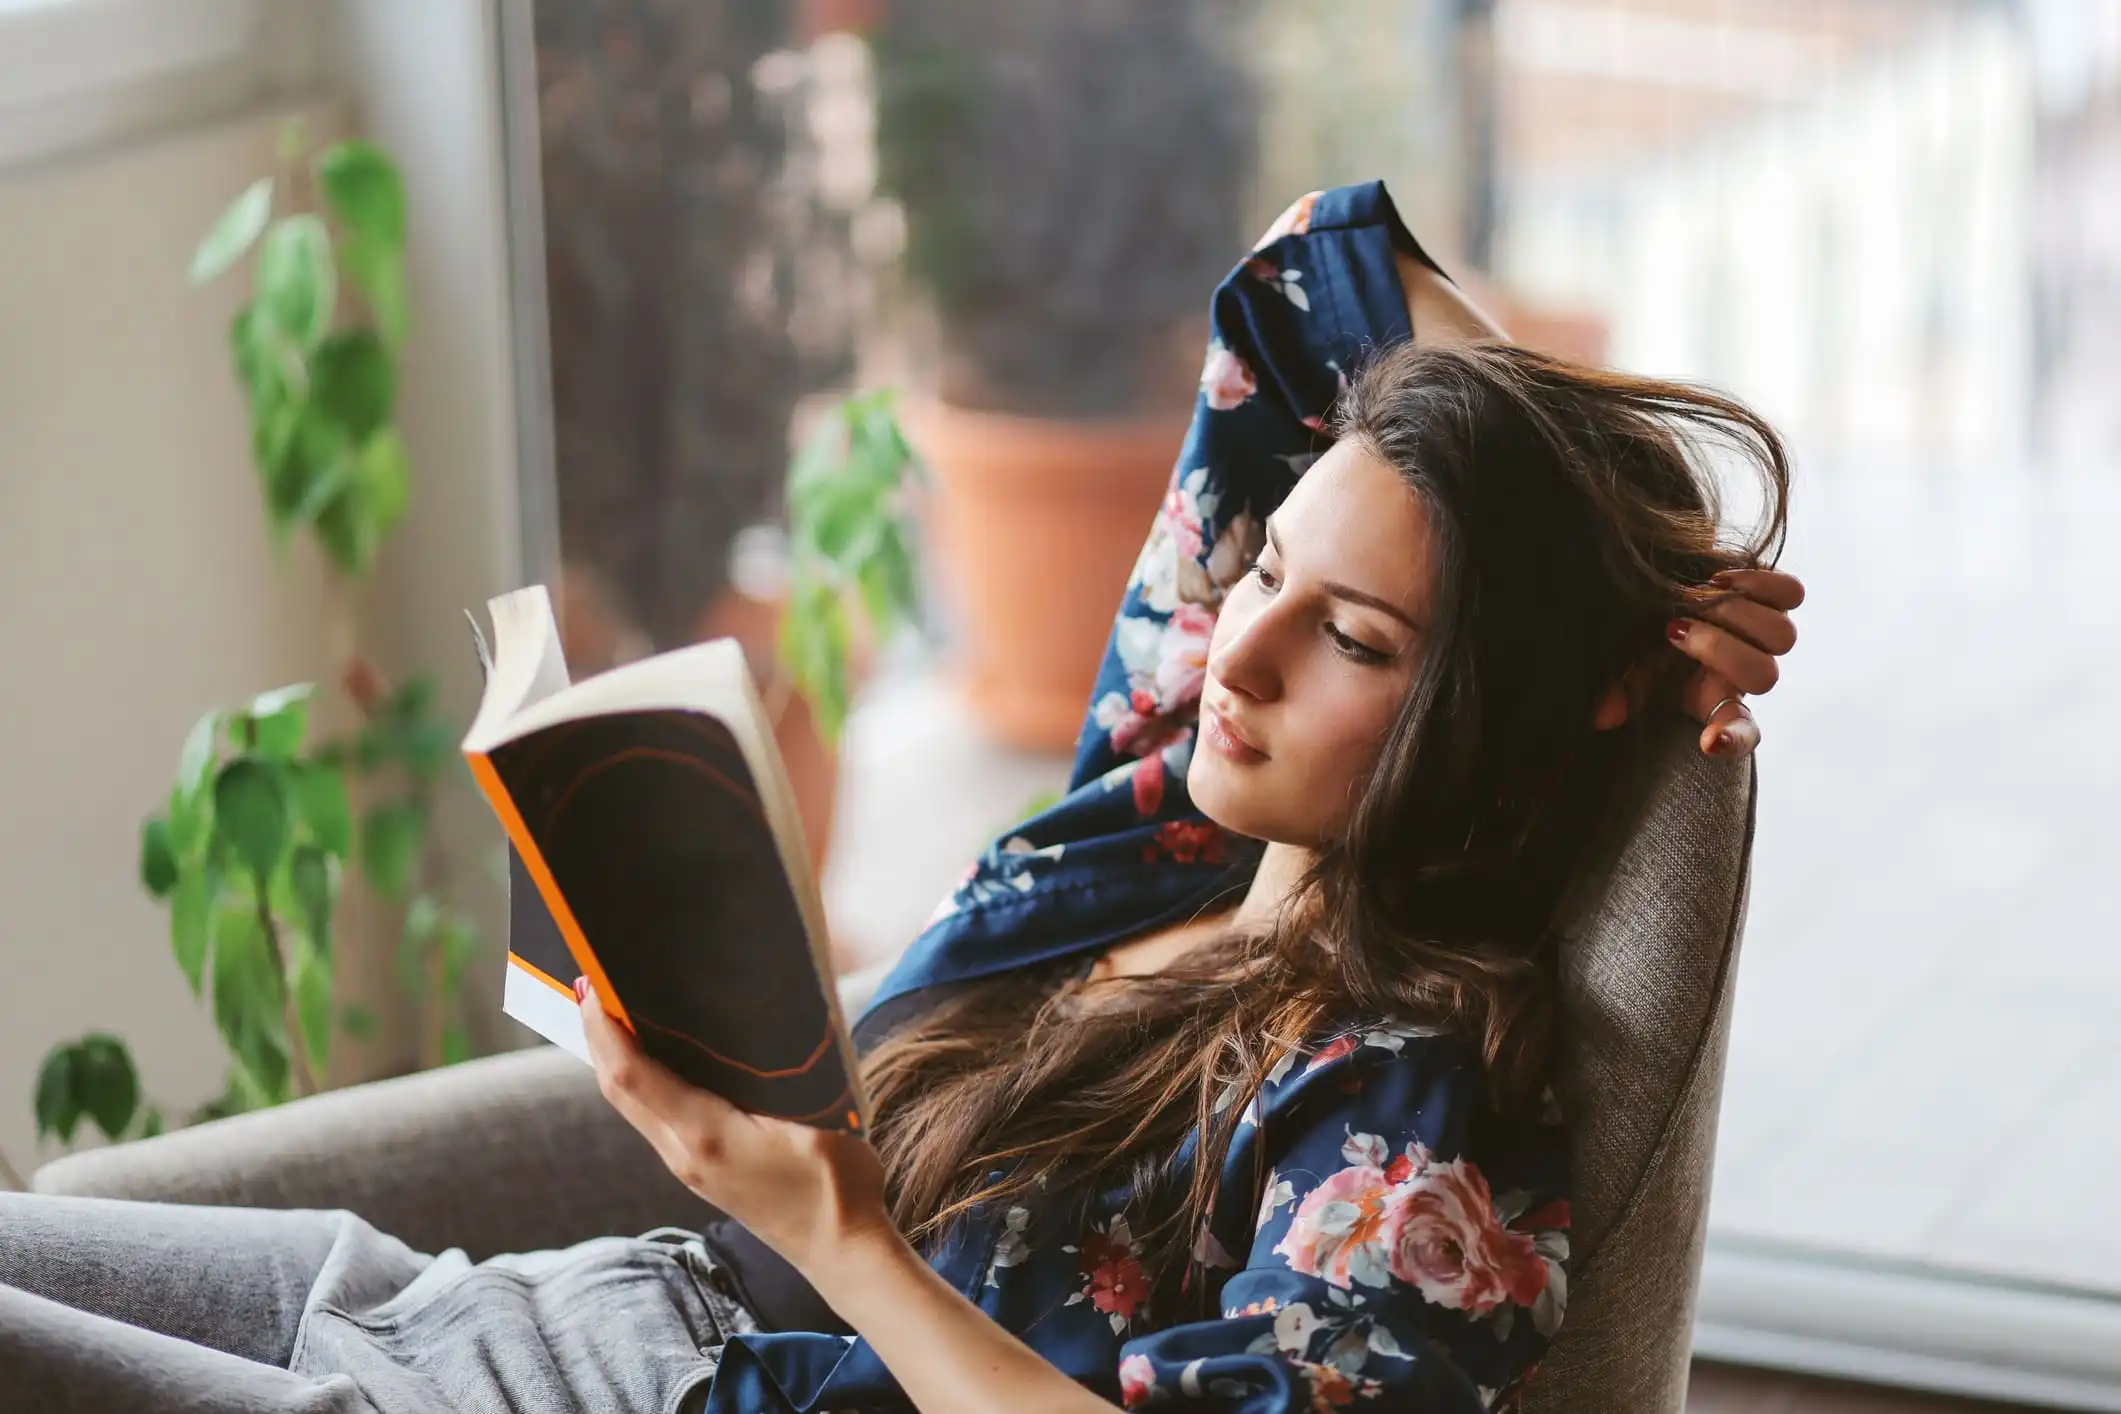 She s reading now. Женщина читает. Читает книгу. Женщина читает книгу. Человек читает.